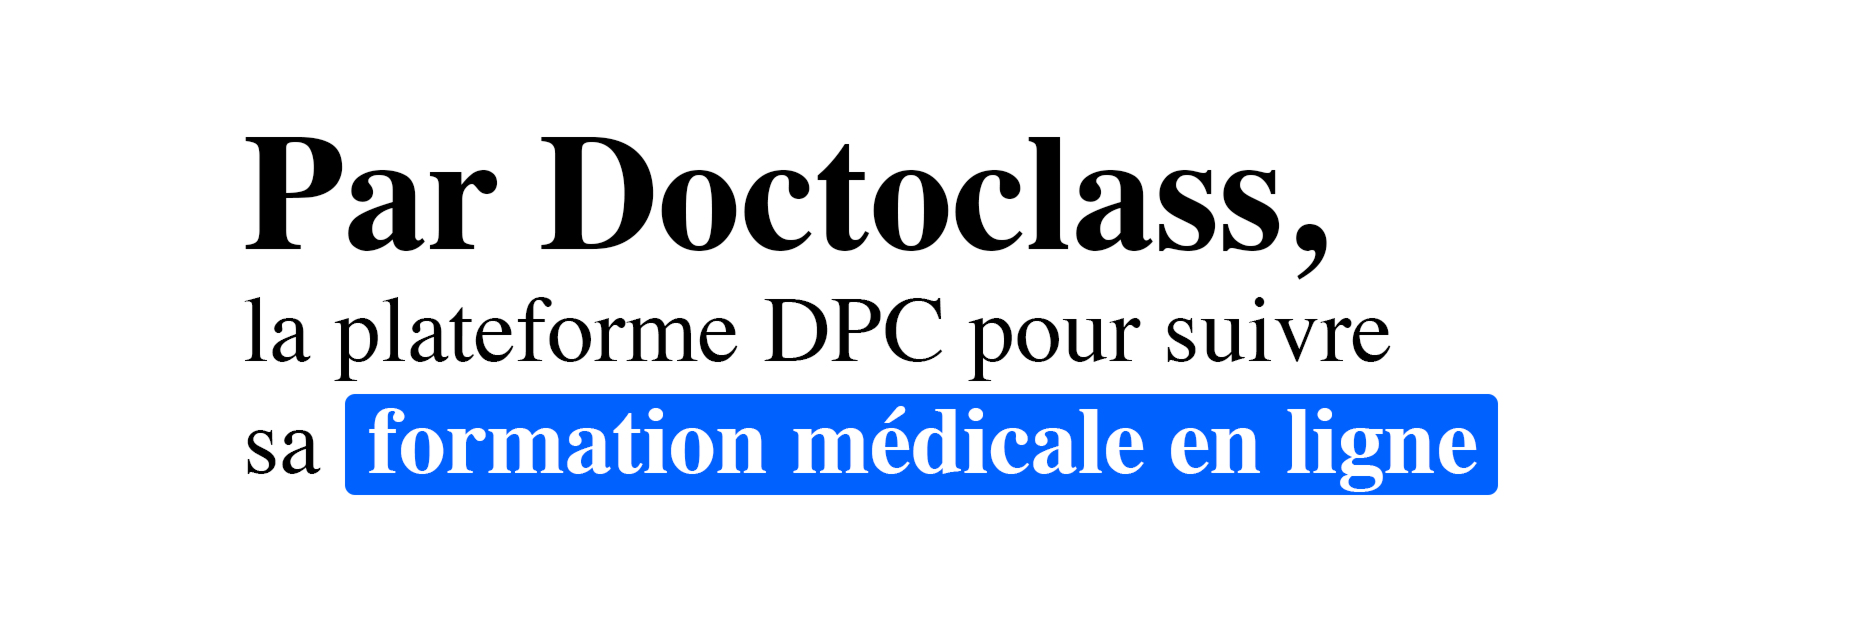 Doctoclass DPC